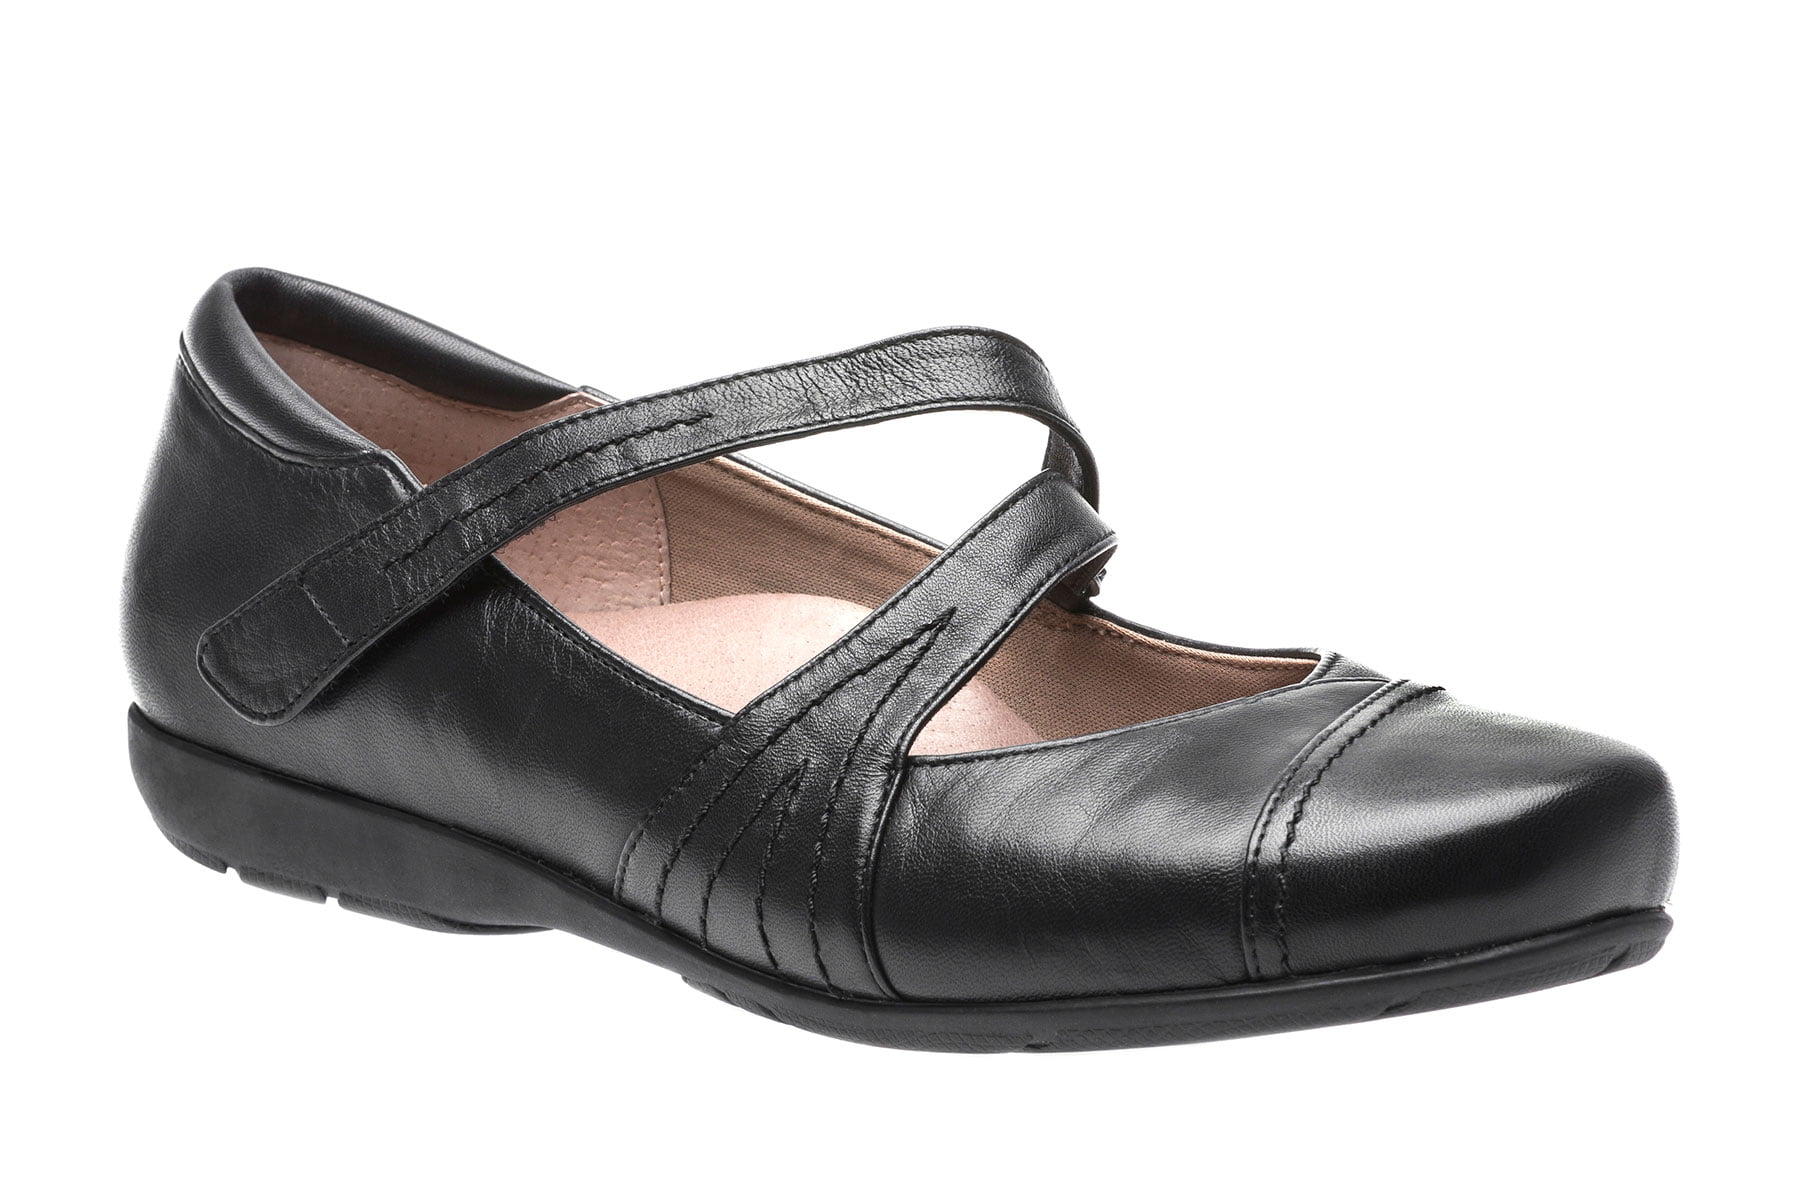 ABEO Footwear - ABEO Tiara Neutral - Dress Shoes - Walmart.com ...